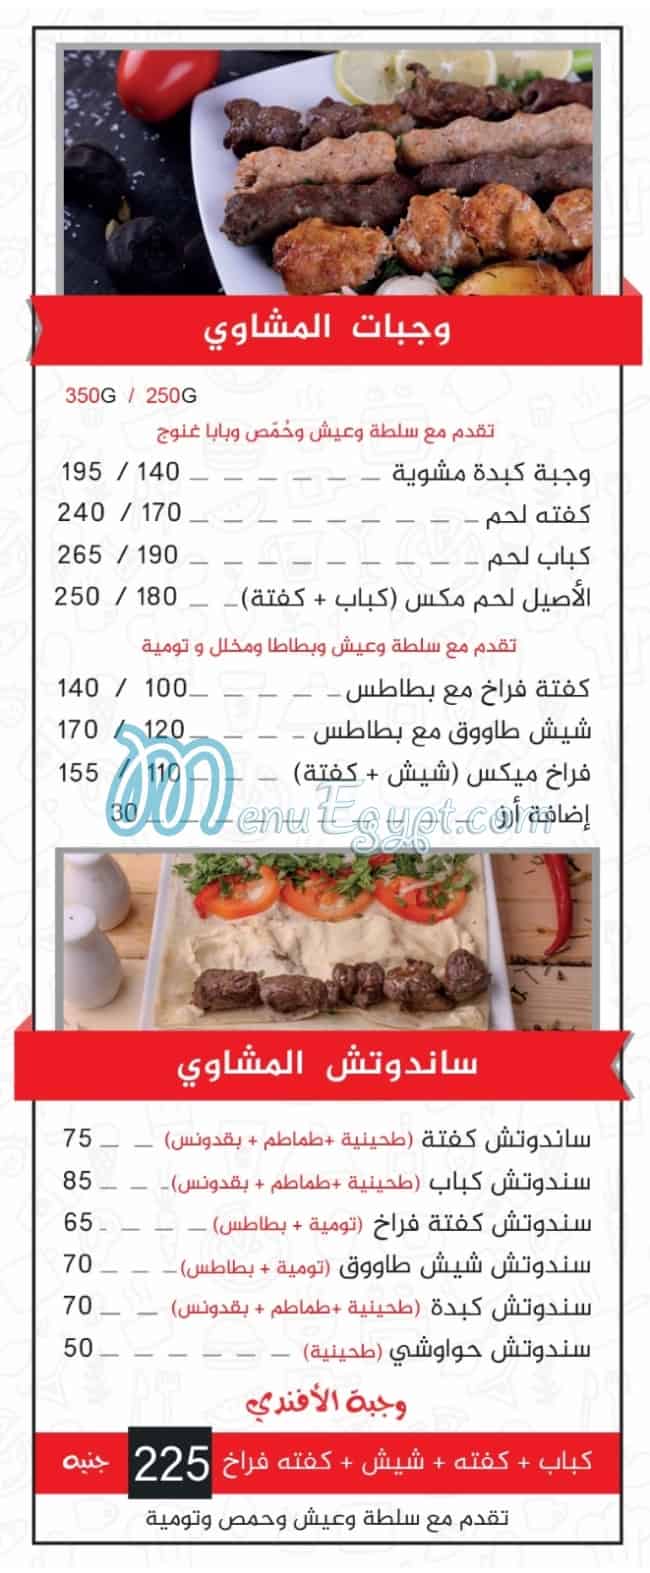 El Asel El Demeshqy delivery menu